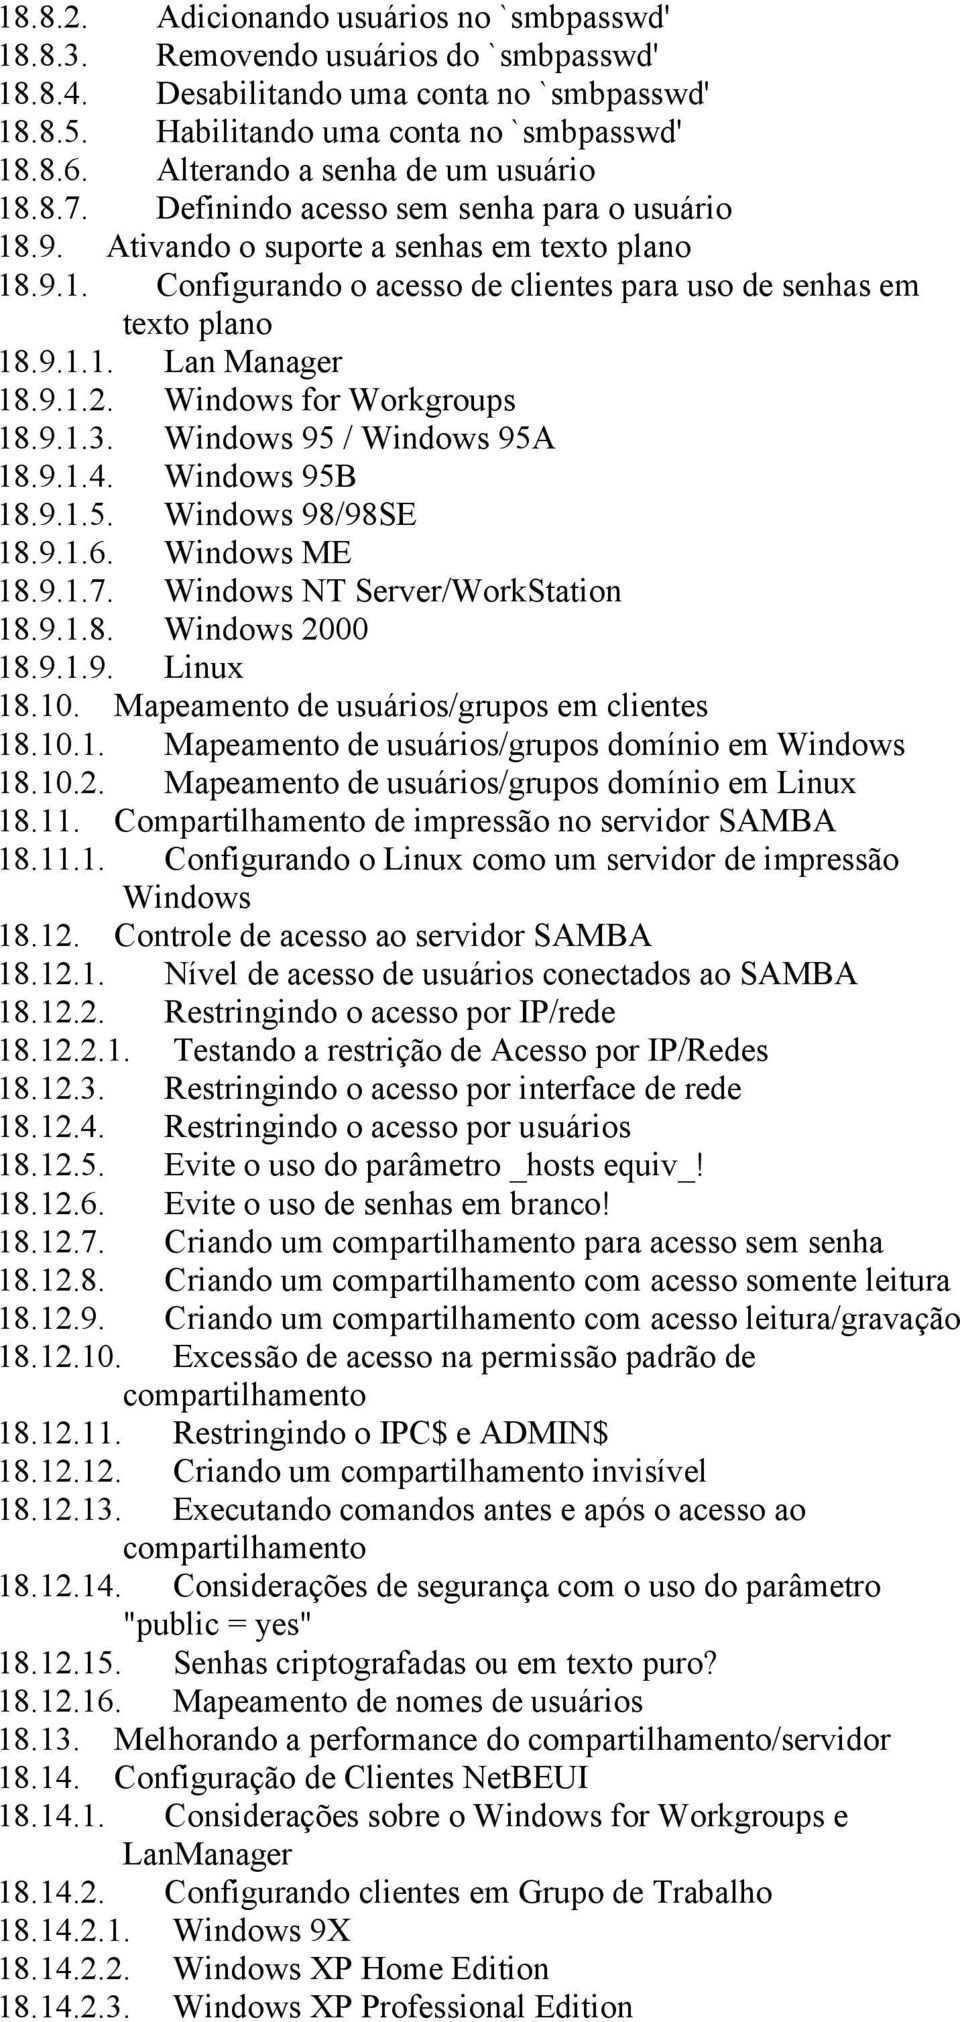 9.1.1. Lan Manager 18.9.1.2. Windows for Workgroups 18.9.1.3. Windows 95 / Windows 95A 18.9.1.4. Windows 95B 18.9.1.5. Windows 98/98SE 18.9.1.6. Windows ME 18.9.1.7. Windows NT Server/WorkStation 18.